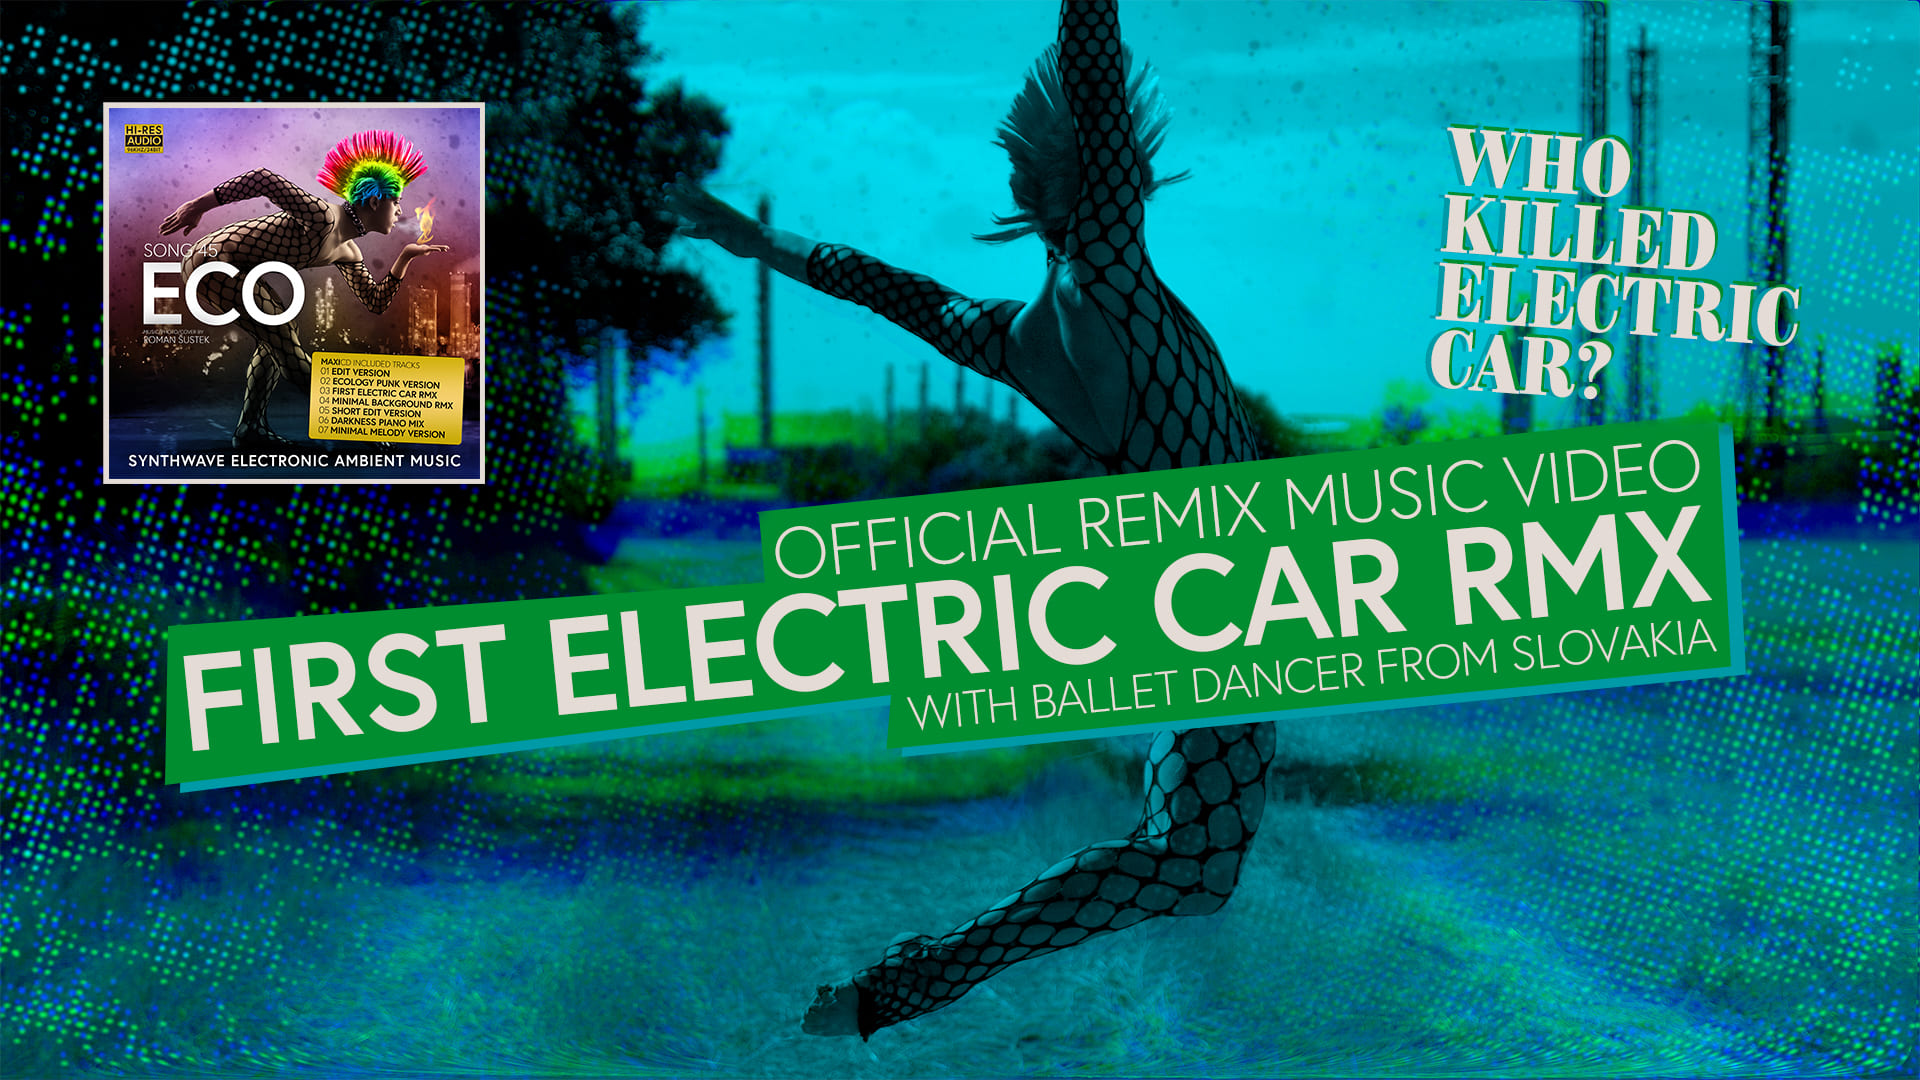 art_history_2021_roman_sustek_remix_first_electric_car_version_music_video_song_45_eco